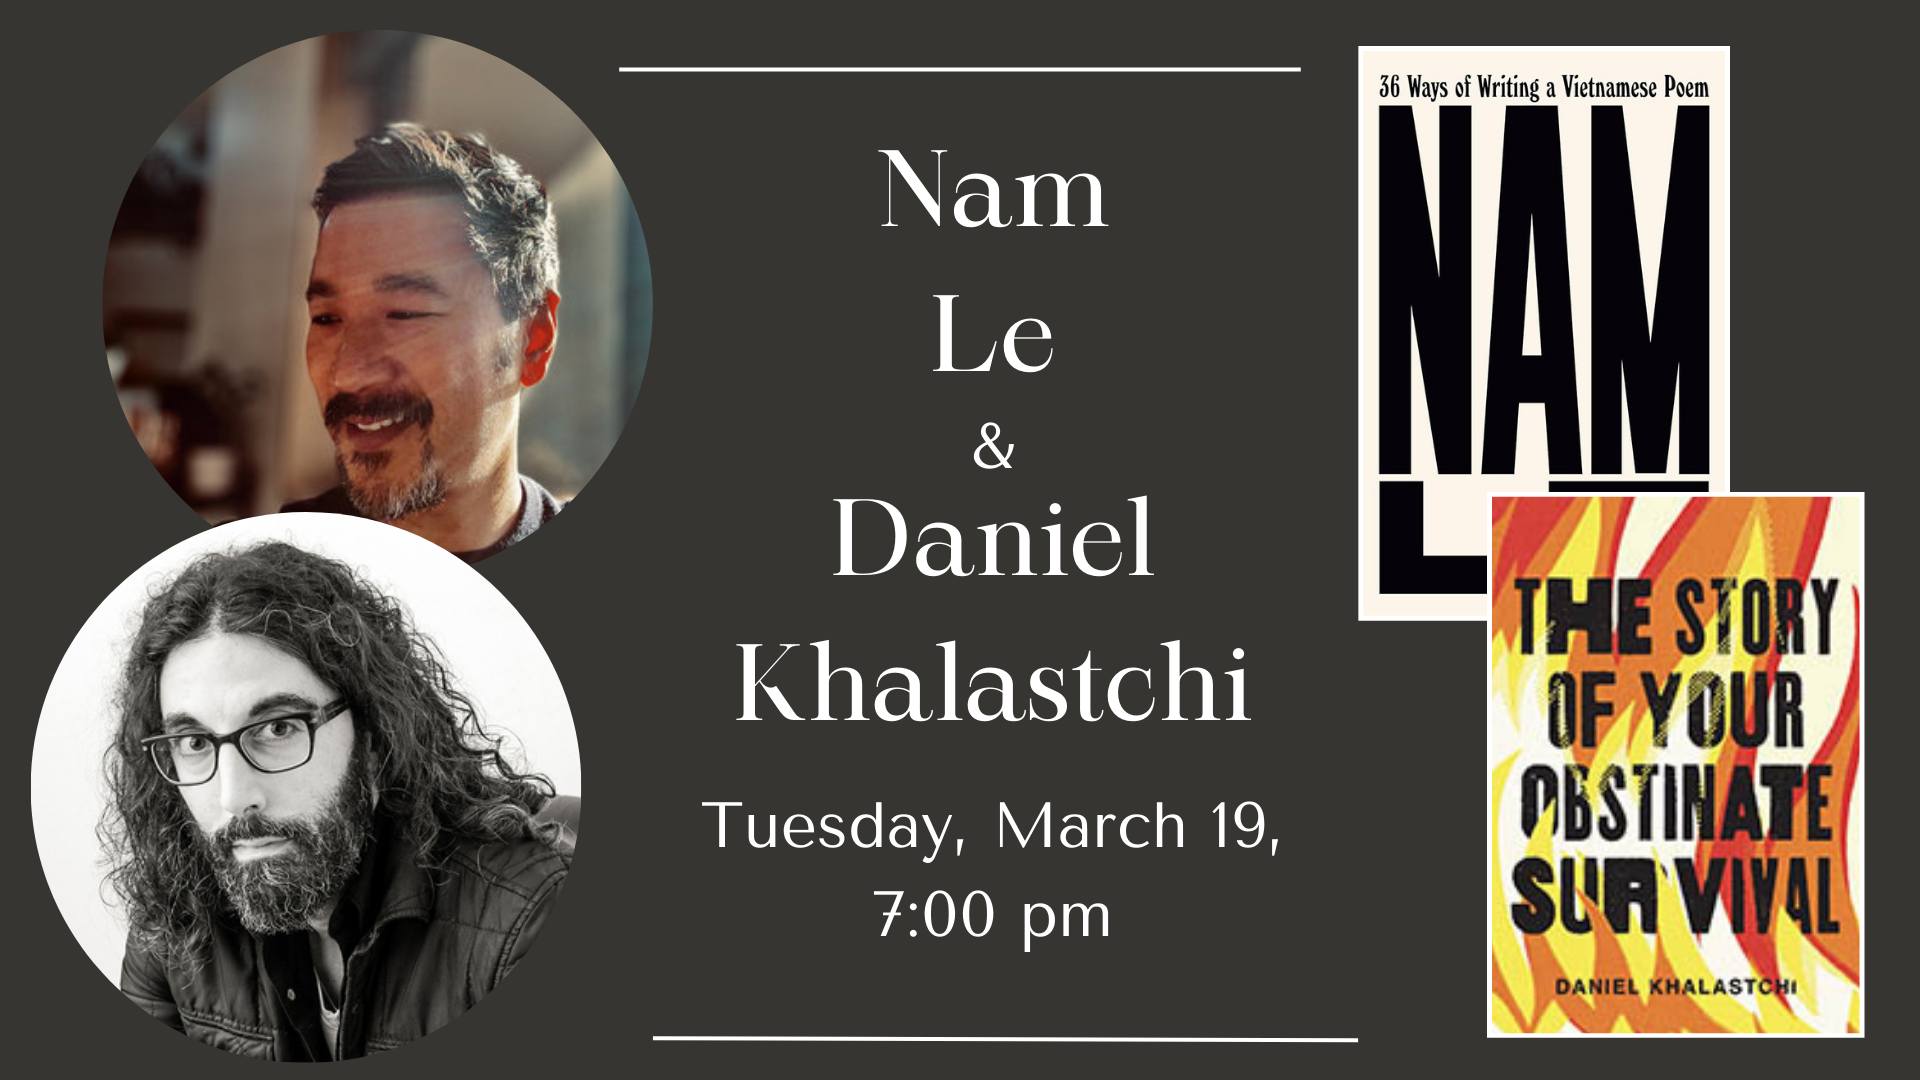 Nam Le and Daniel Khalastchi